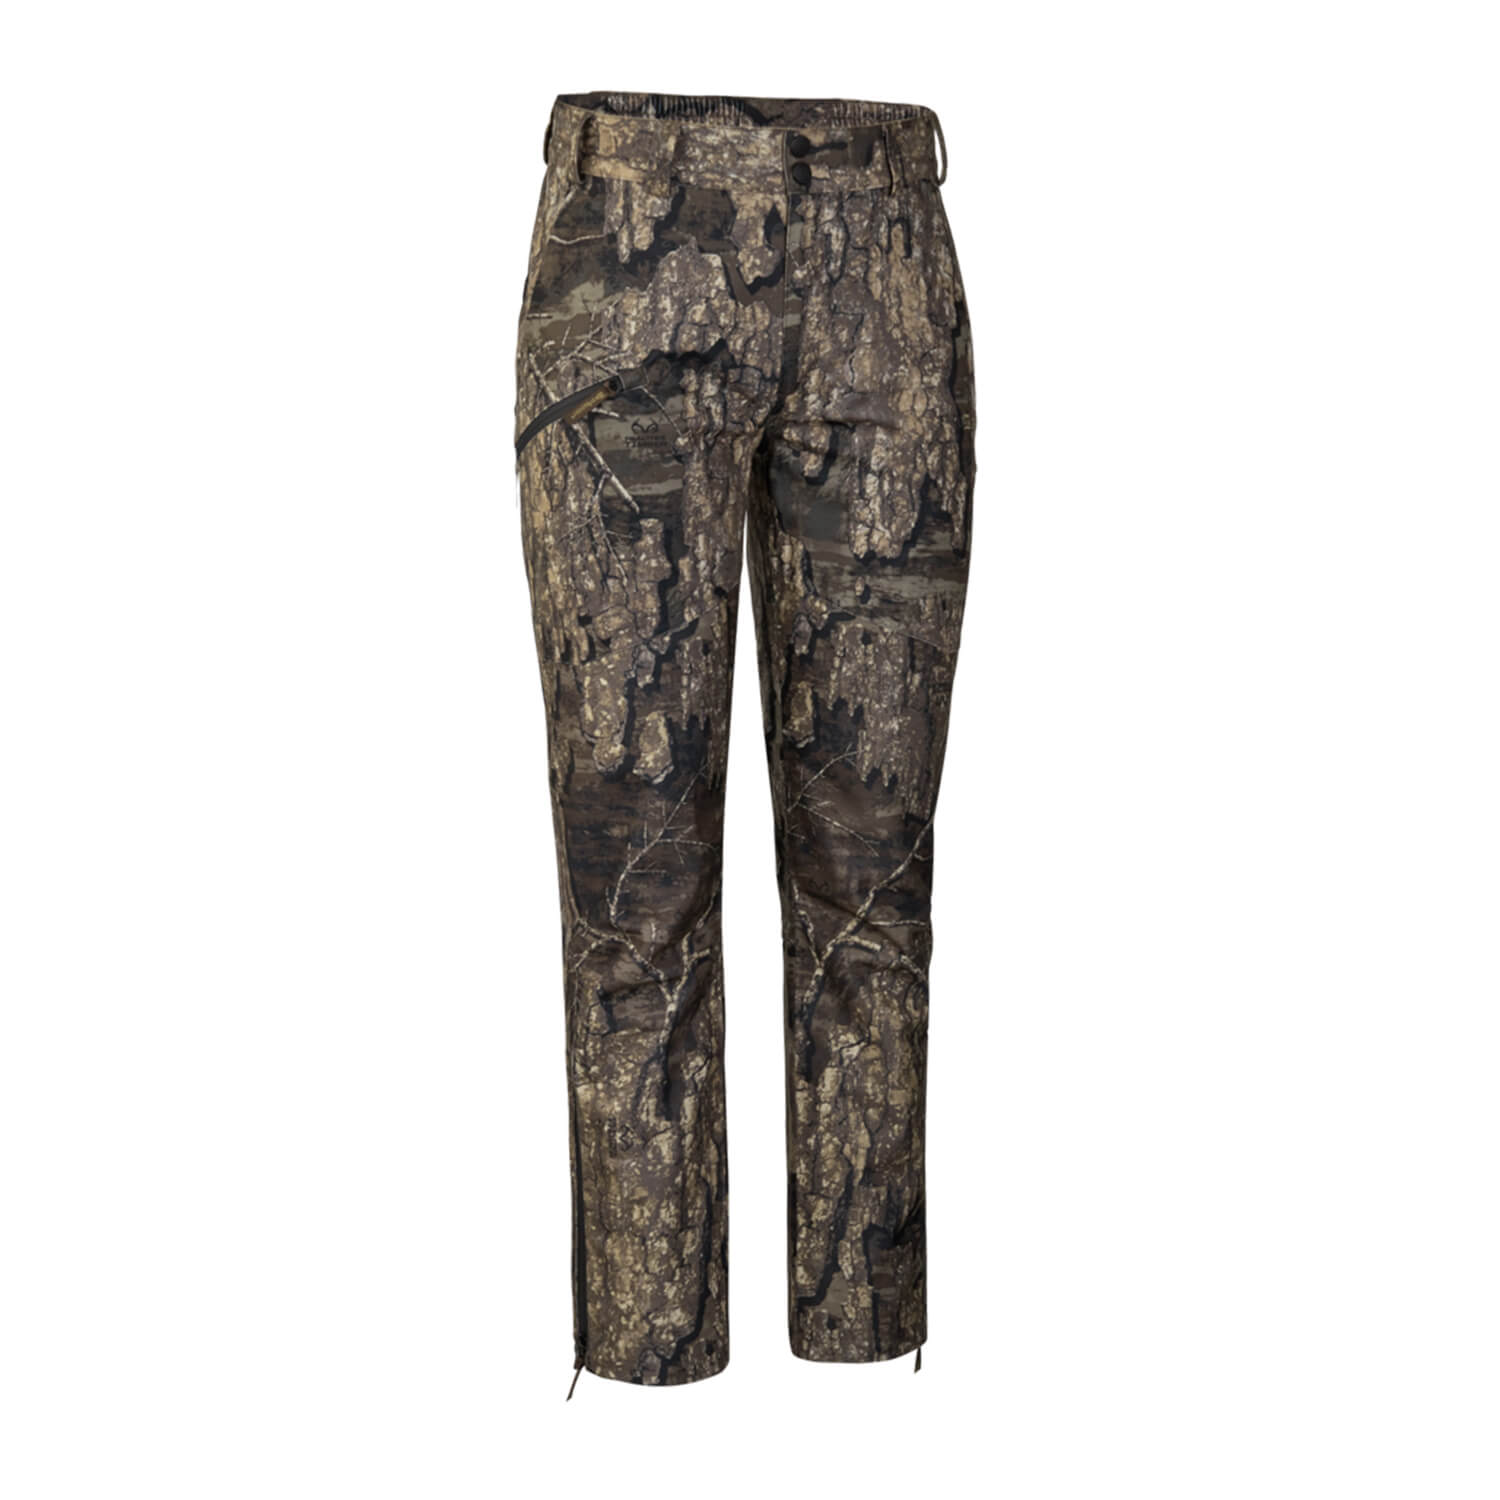 Deerhunter trousers Pro Gamekeeper (Realtree Timber) - Camouflage Trousers